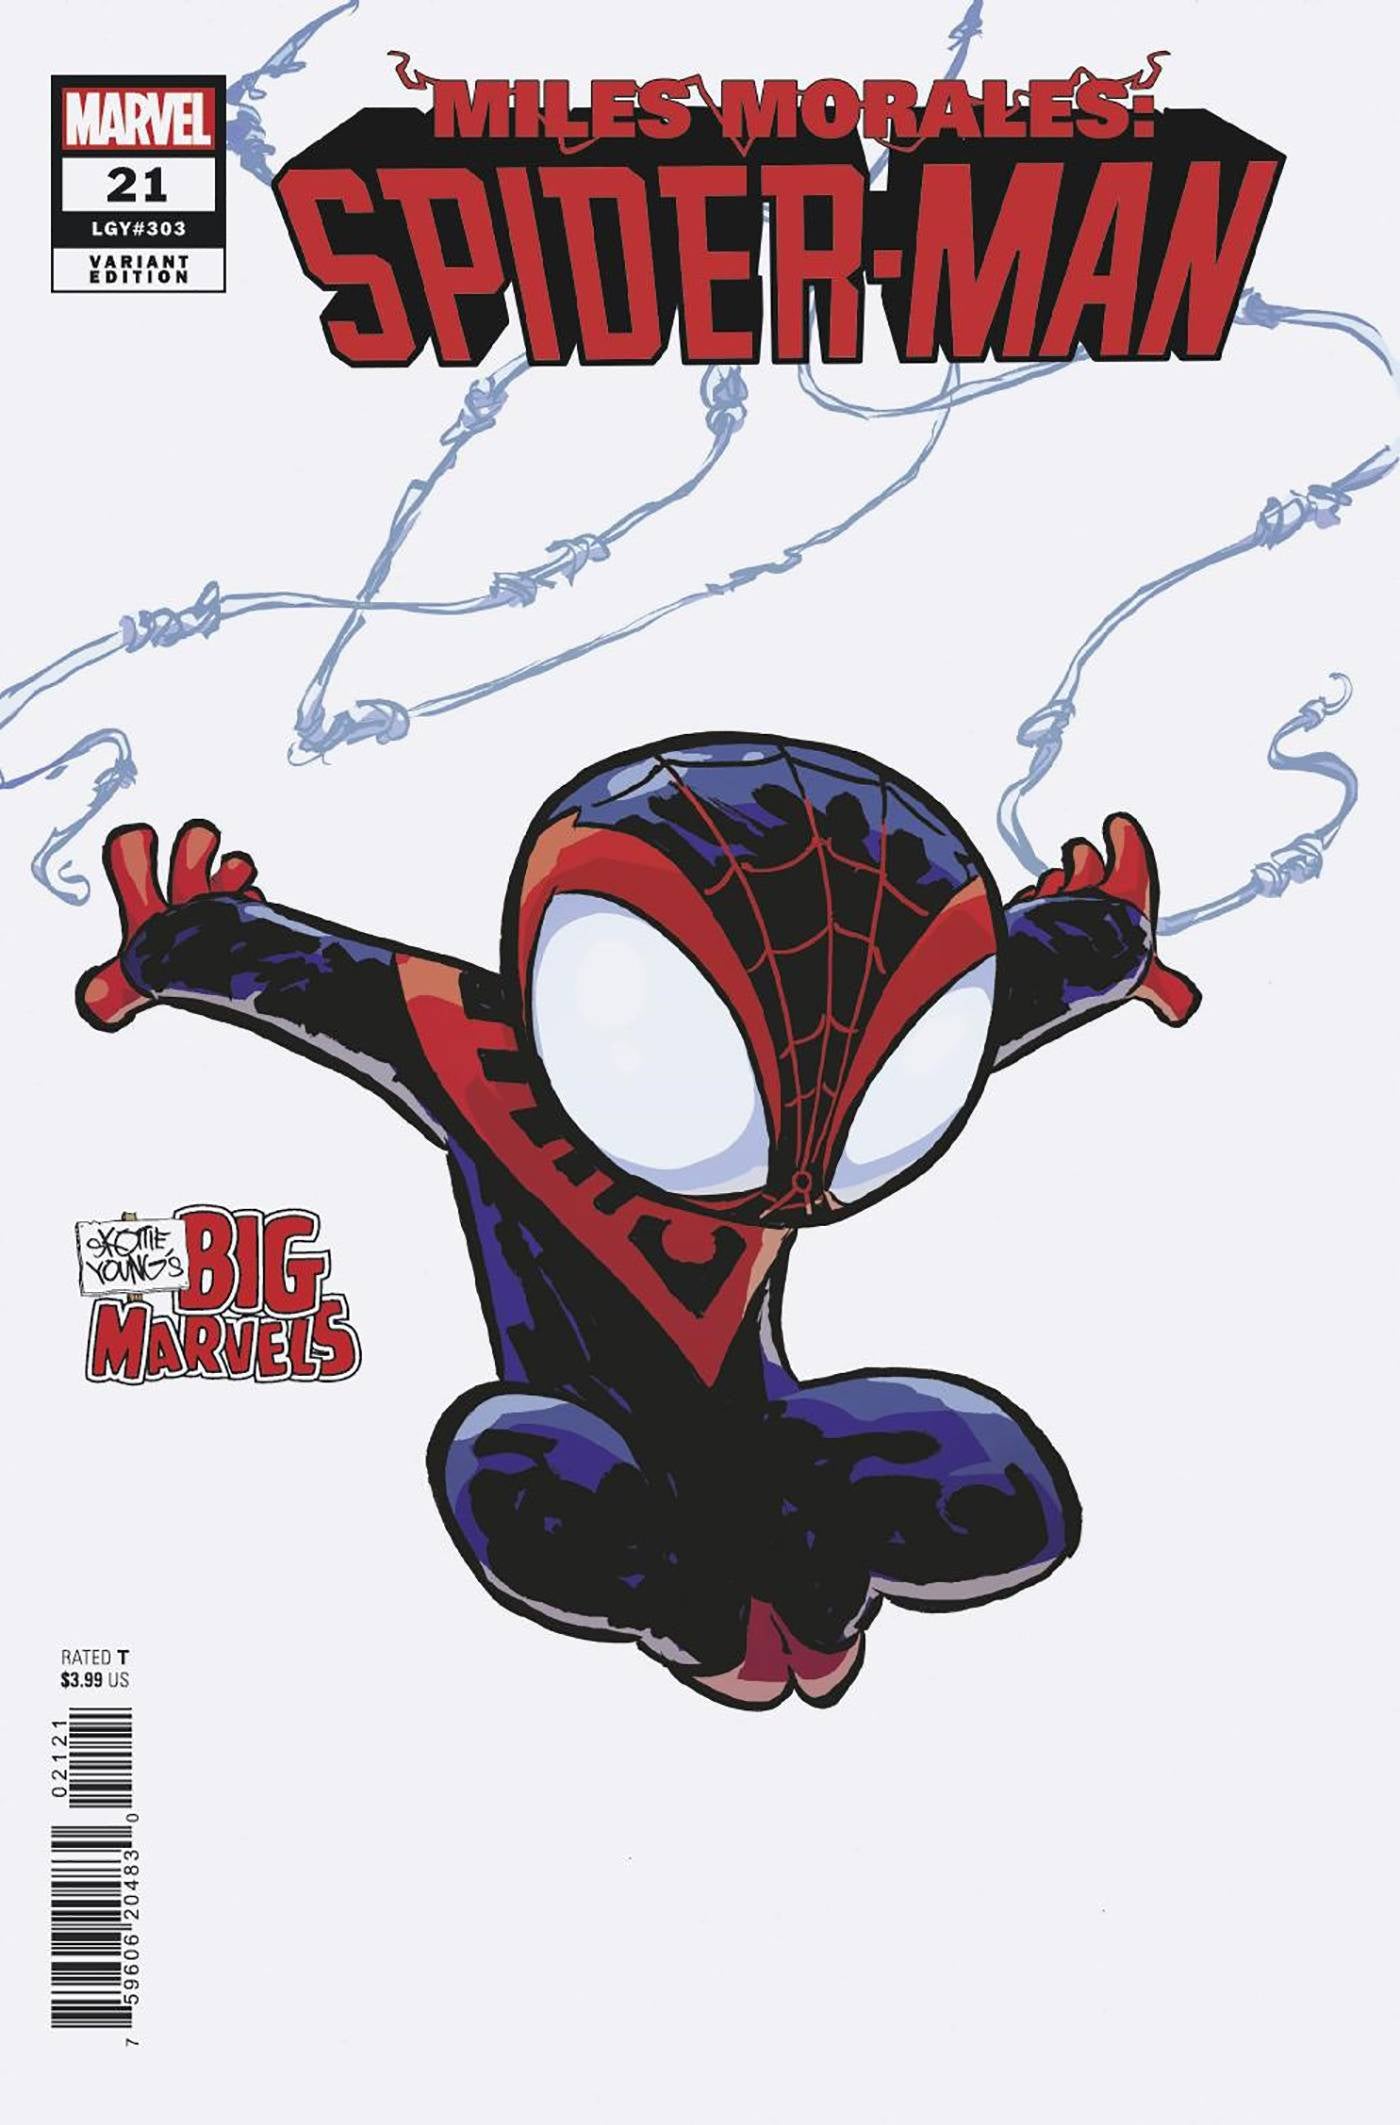 MILES MORALES SPIDER-MAN #21 SKOTTIE YOUNG BIG MARVEL VAR (12 Jun Release)